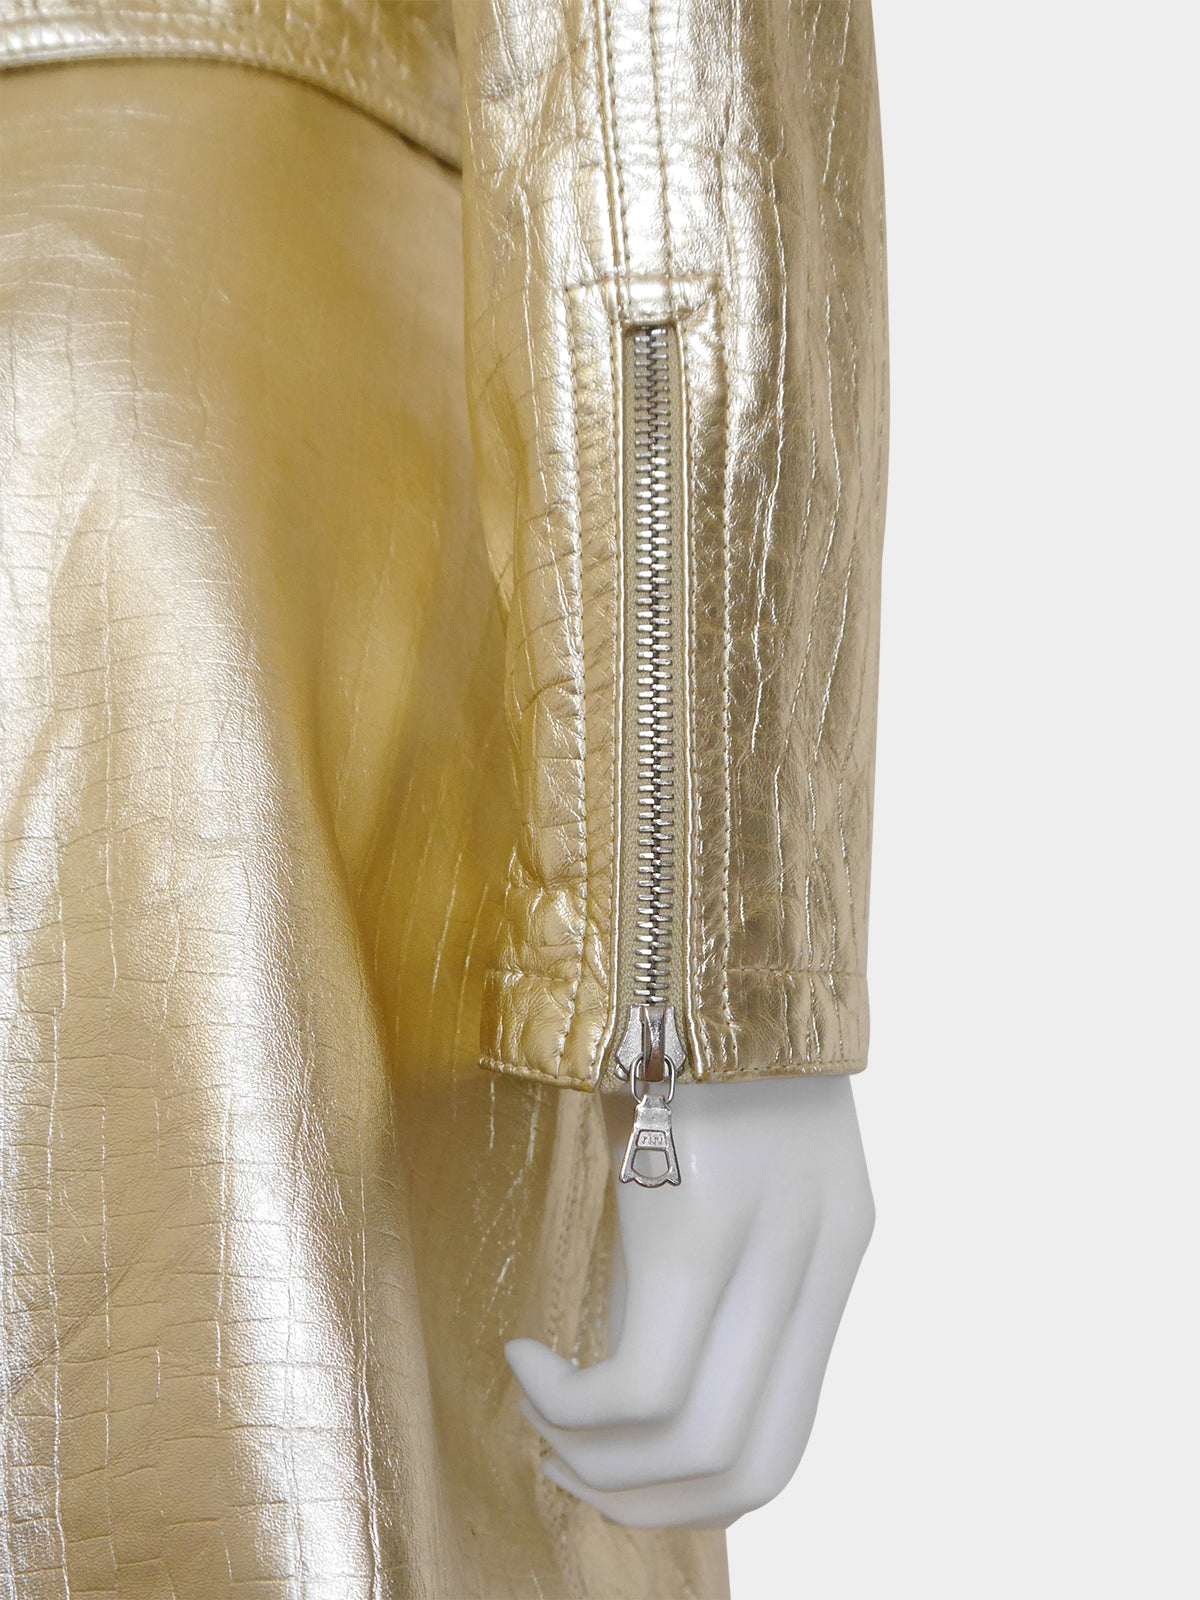 GIANNI VERSACE Fall 1994 Vintage Metallic Gold Leather Biker Jacket & Skirt Suit